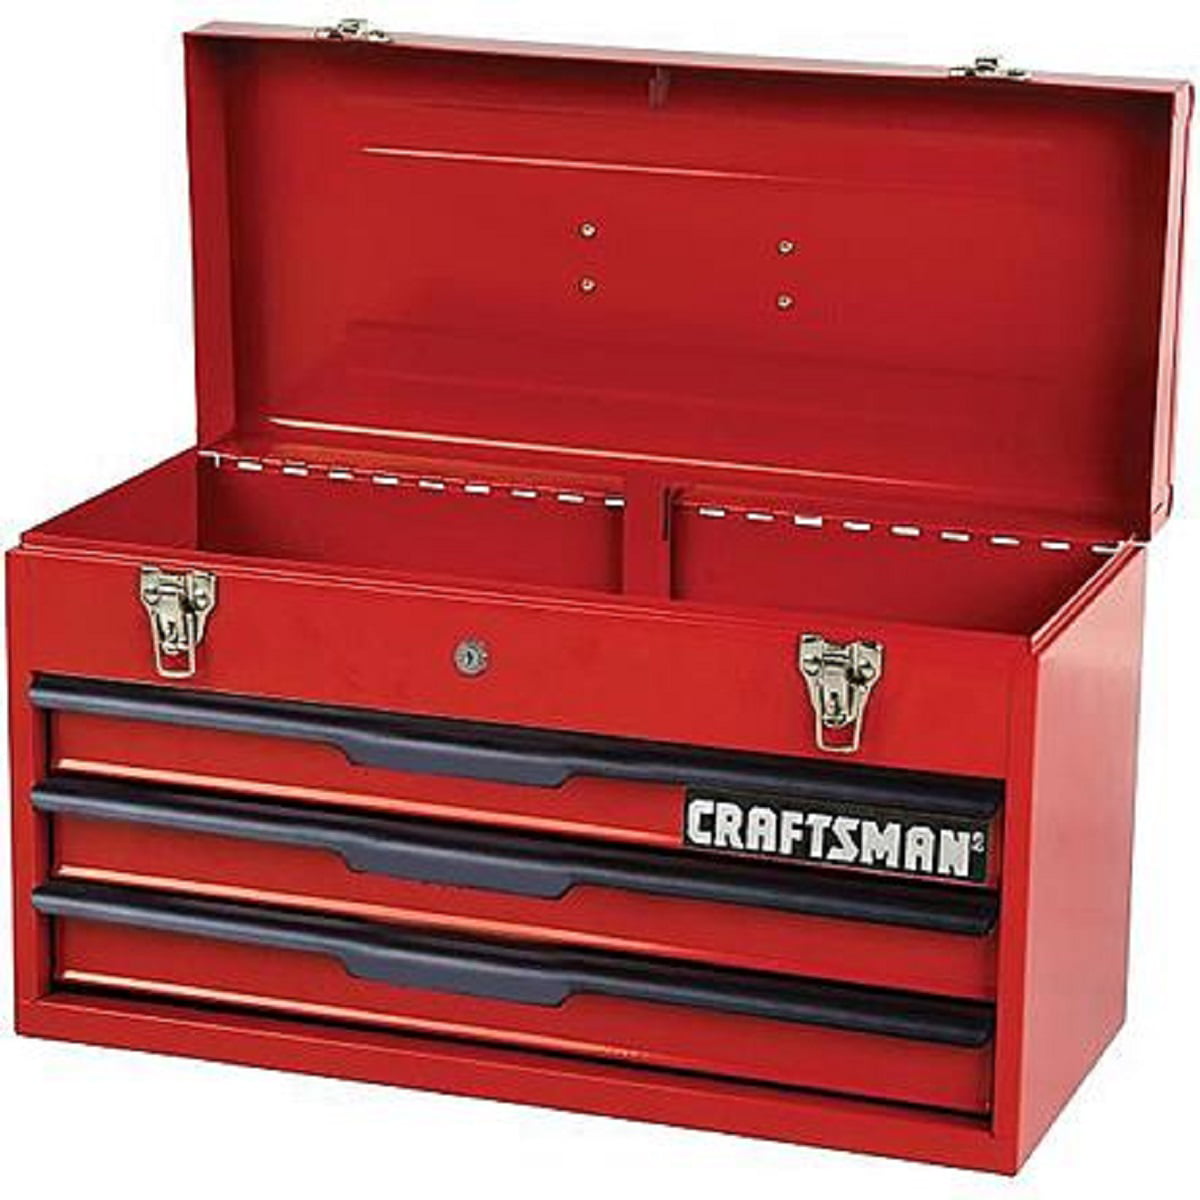 Craftsman 3-Drawer Portable Tool Chest. Craftsman Tool Box s2000. Craftsman ящик для инструментов. Craftsman Toolbox.